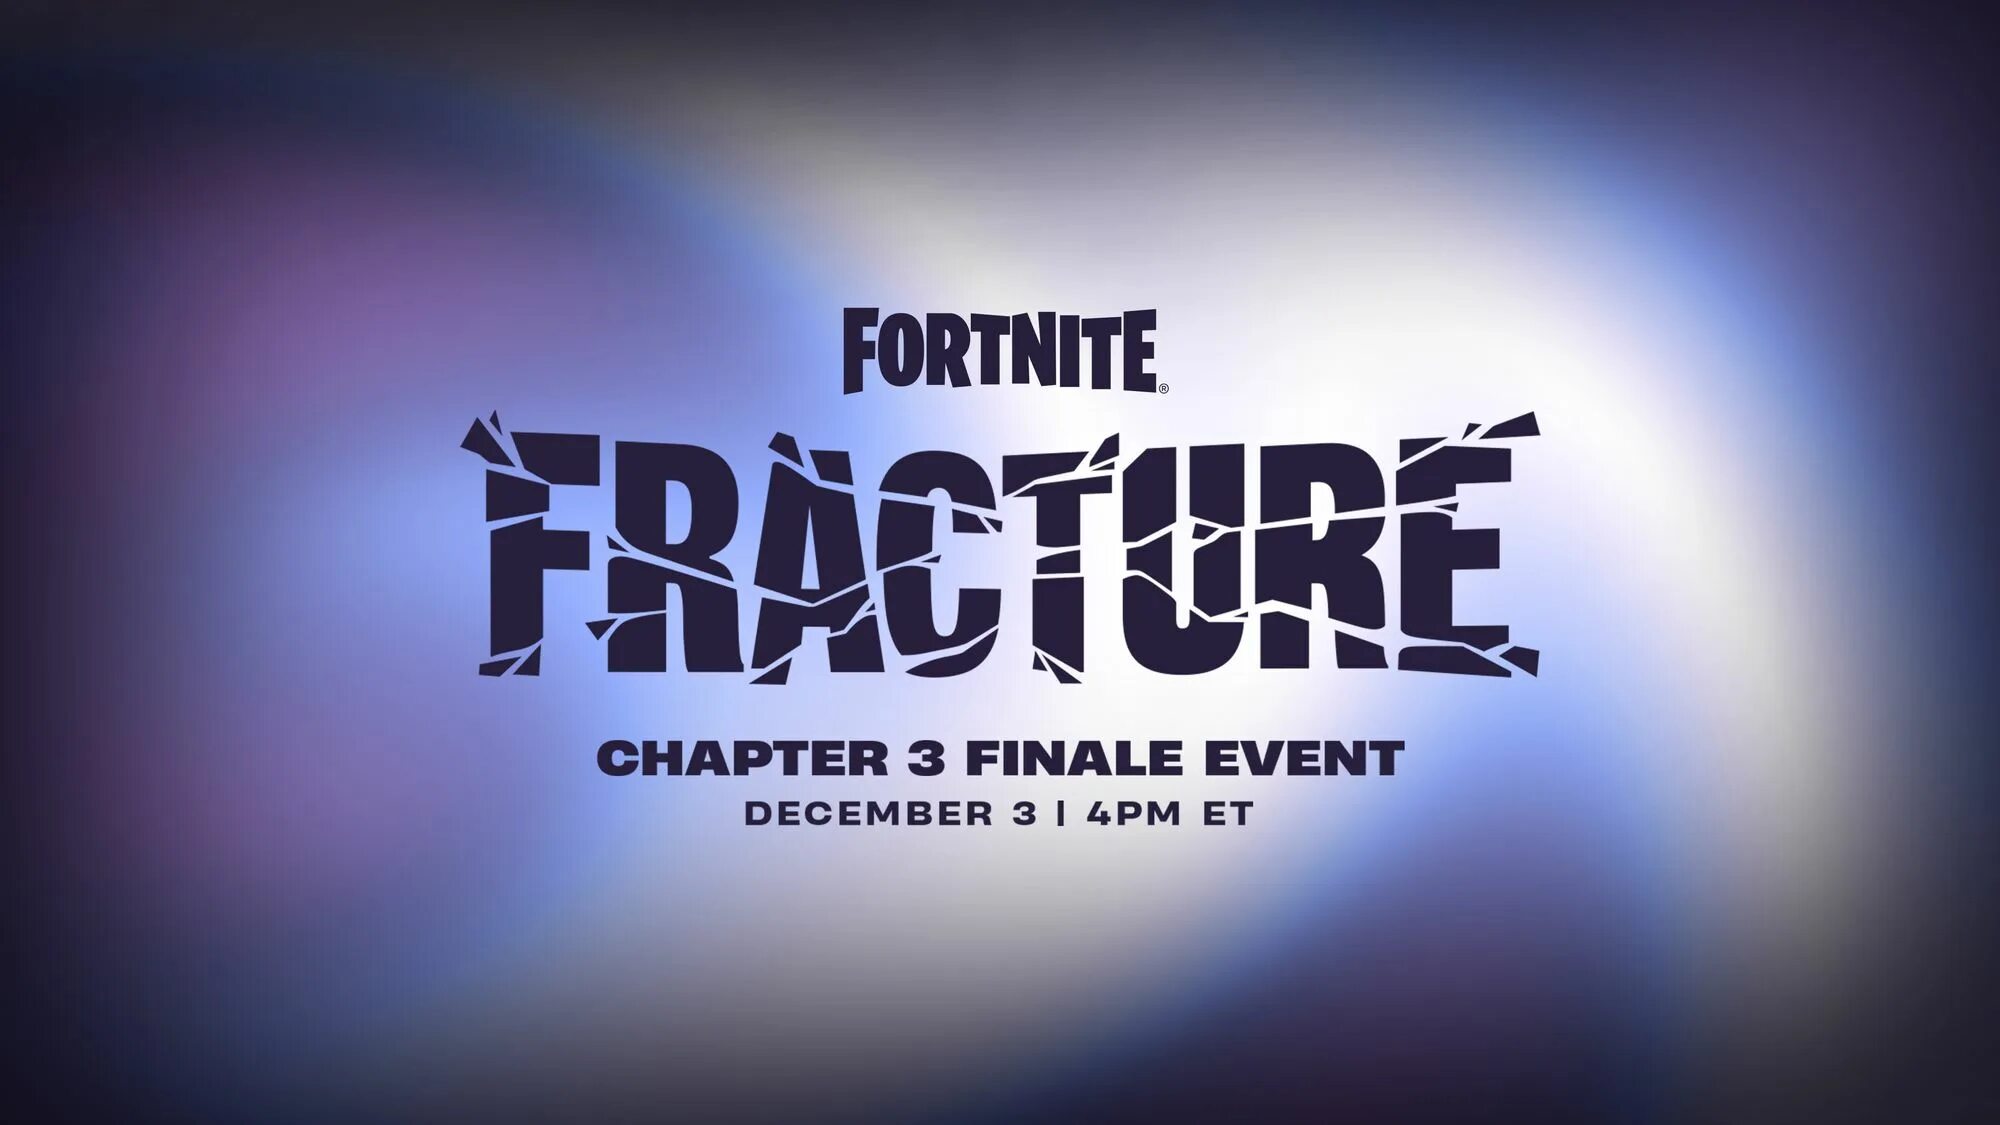 Finals event. Fortnite Live event. ФОРТНАЙТ Fracture. Ивент 3.3.